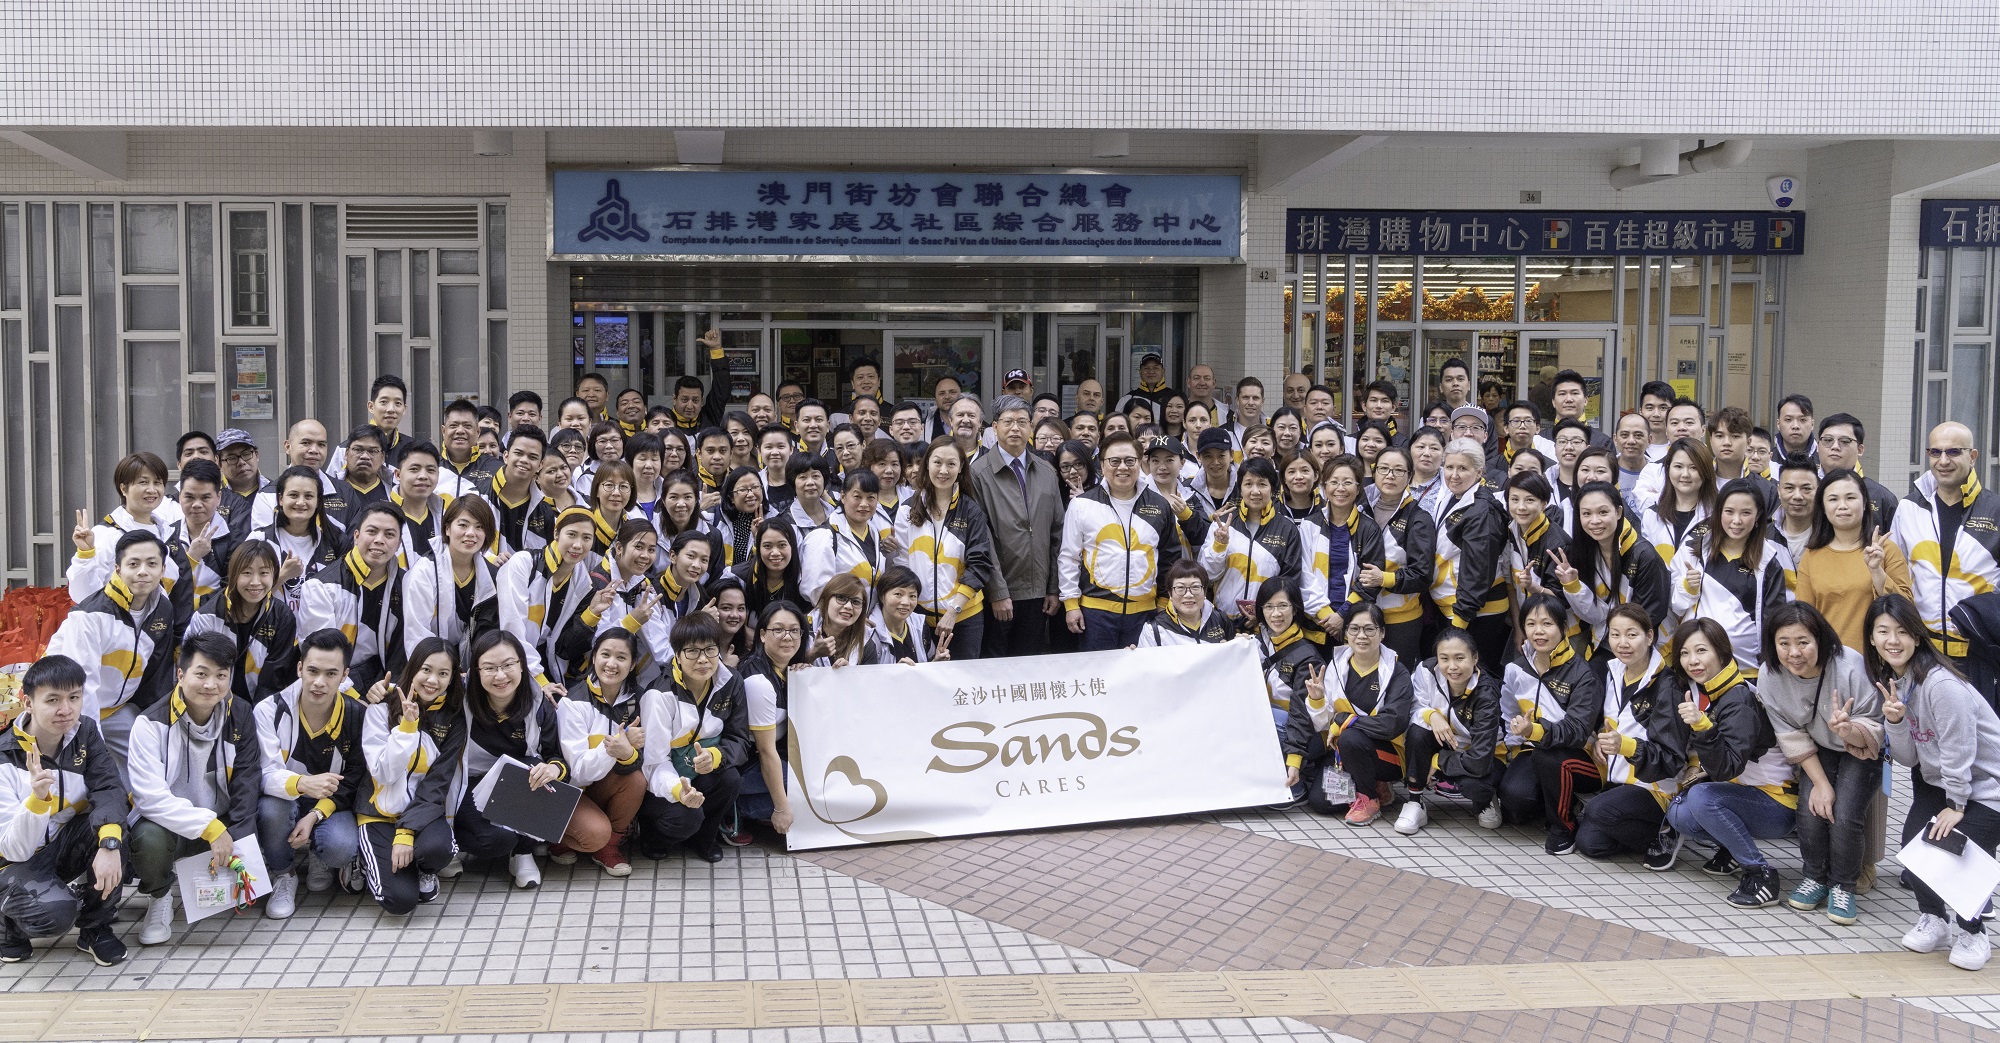 Sands China Ltd Care Ambassador's Great Picture